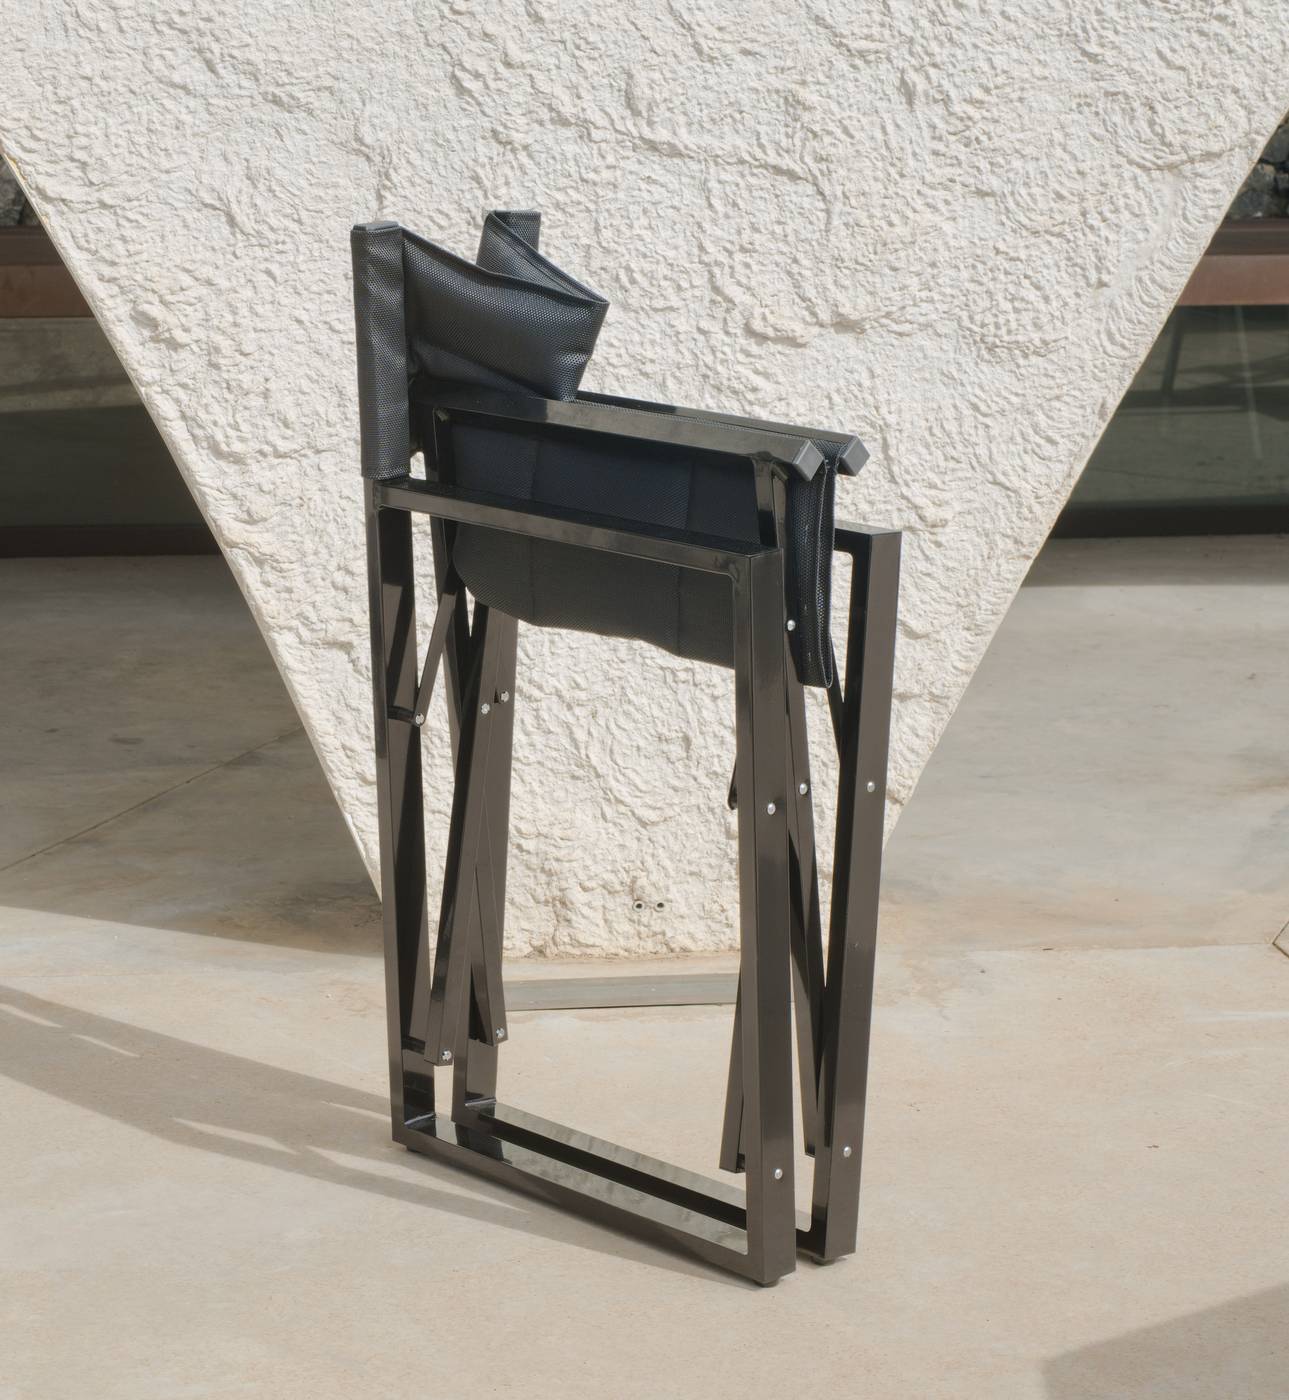 Set Aluminio Palma-Sinara 90-4 - Conjunto aluminio luxe: Mesa cuadrada 90 cm + 4 sillones plegables. Disponible en color blanco o antracita.